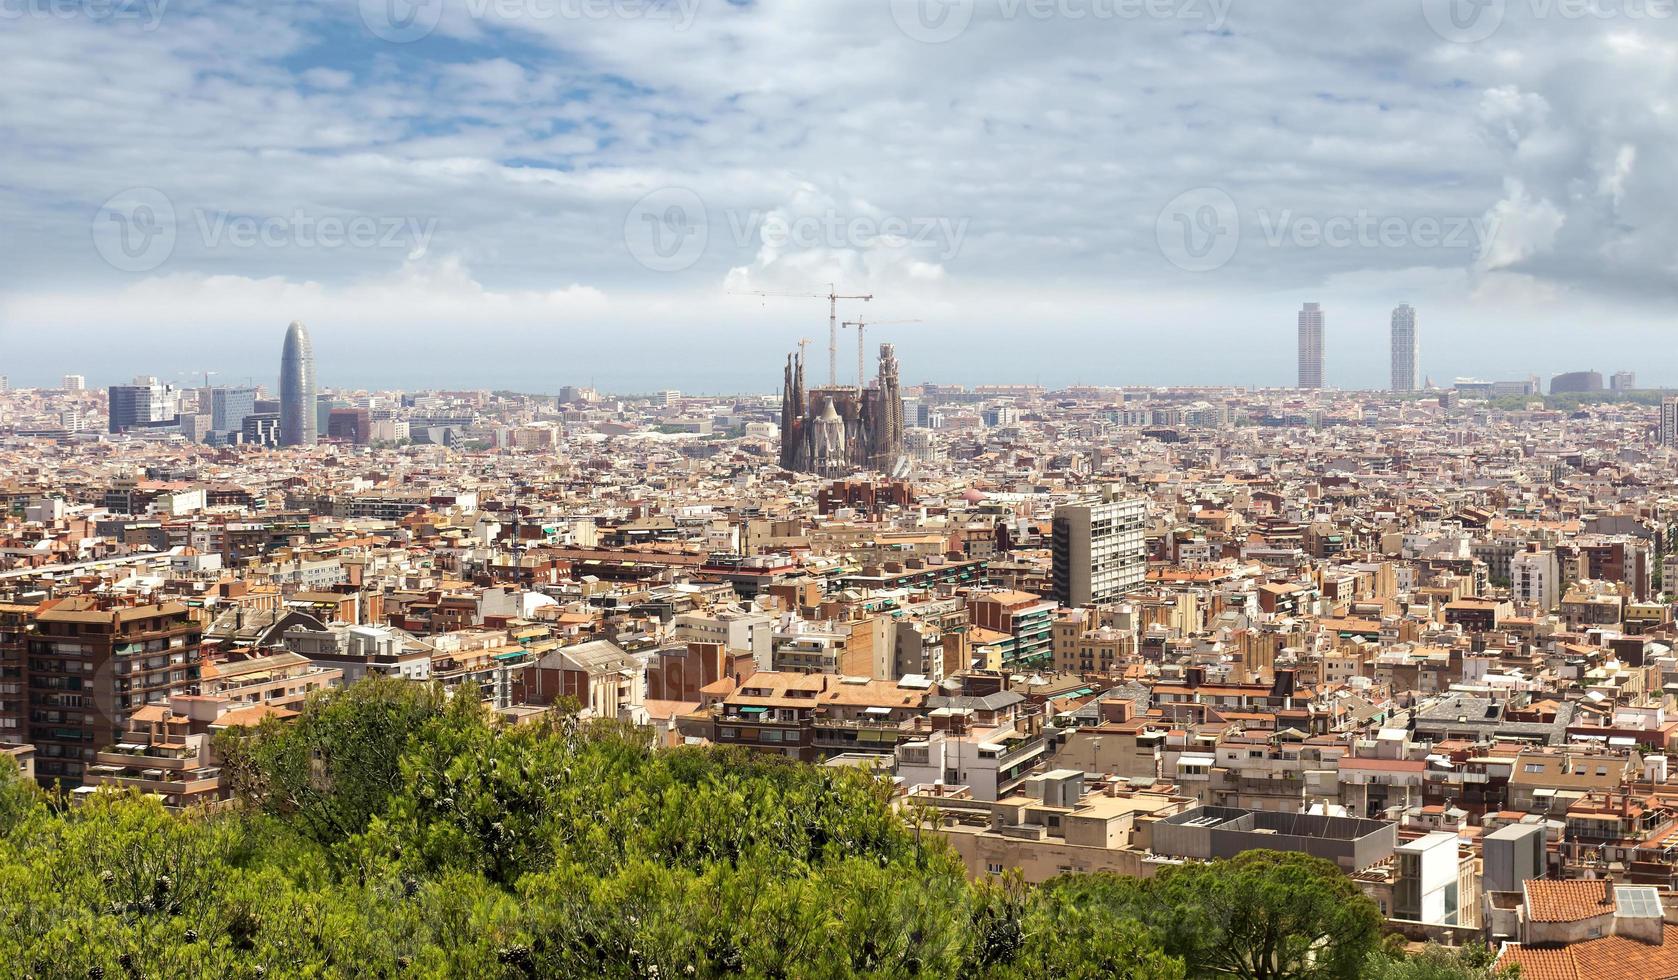 Panoramablick auf Barcelona foto